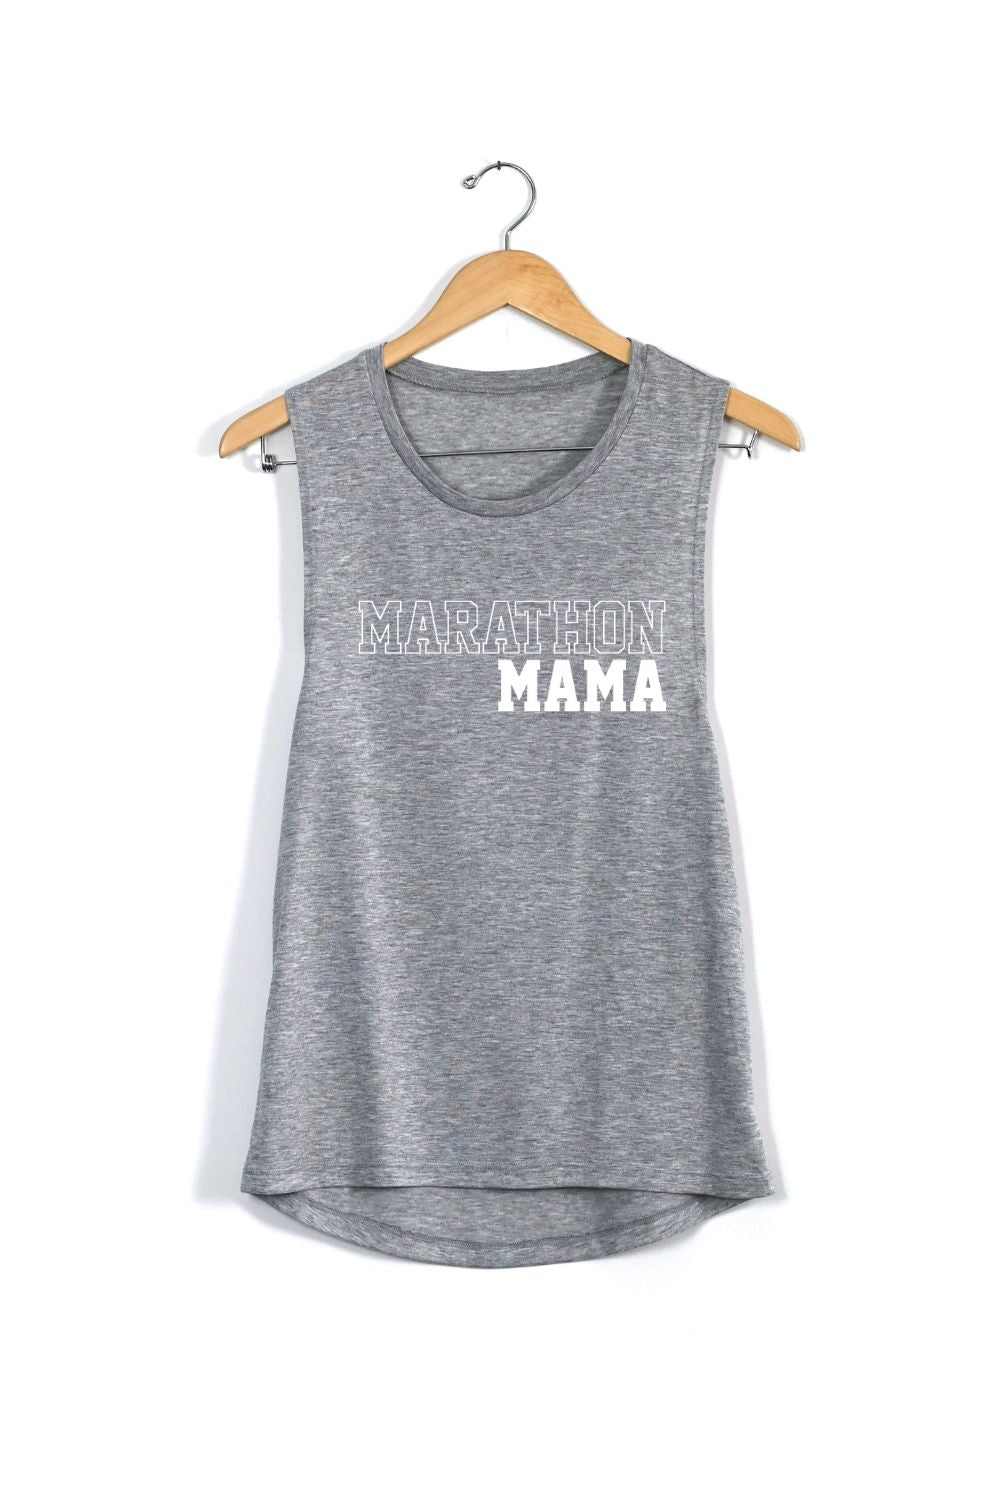 Marathon Mama Muscle Tank